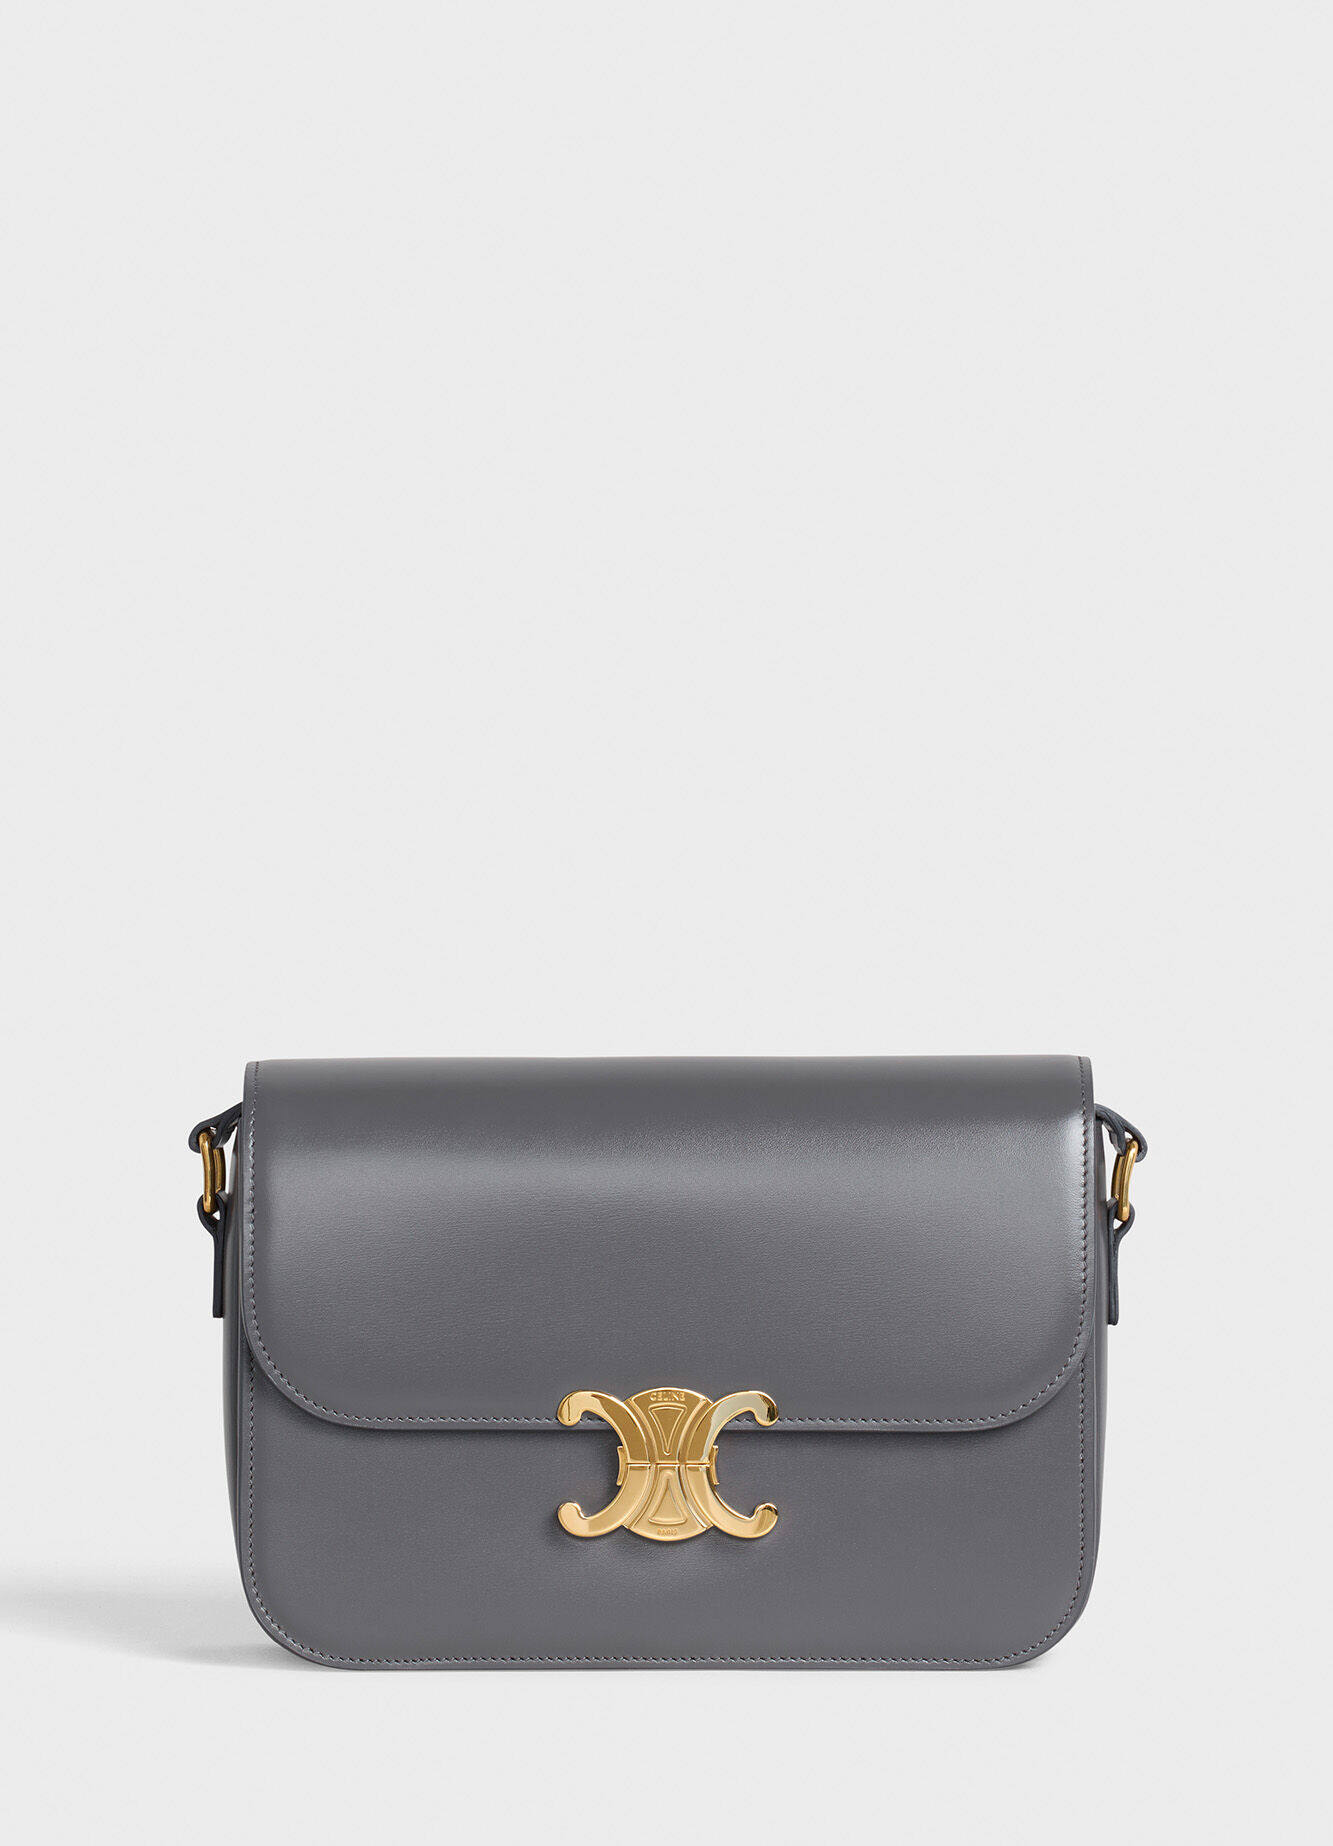 TRIOMPHE Bag灰色手袋 $28,500